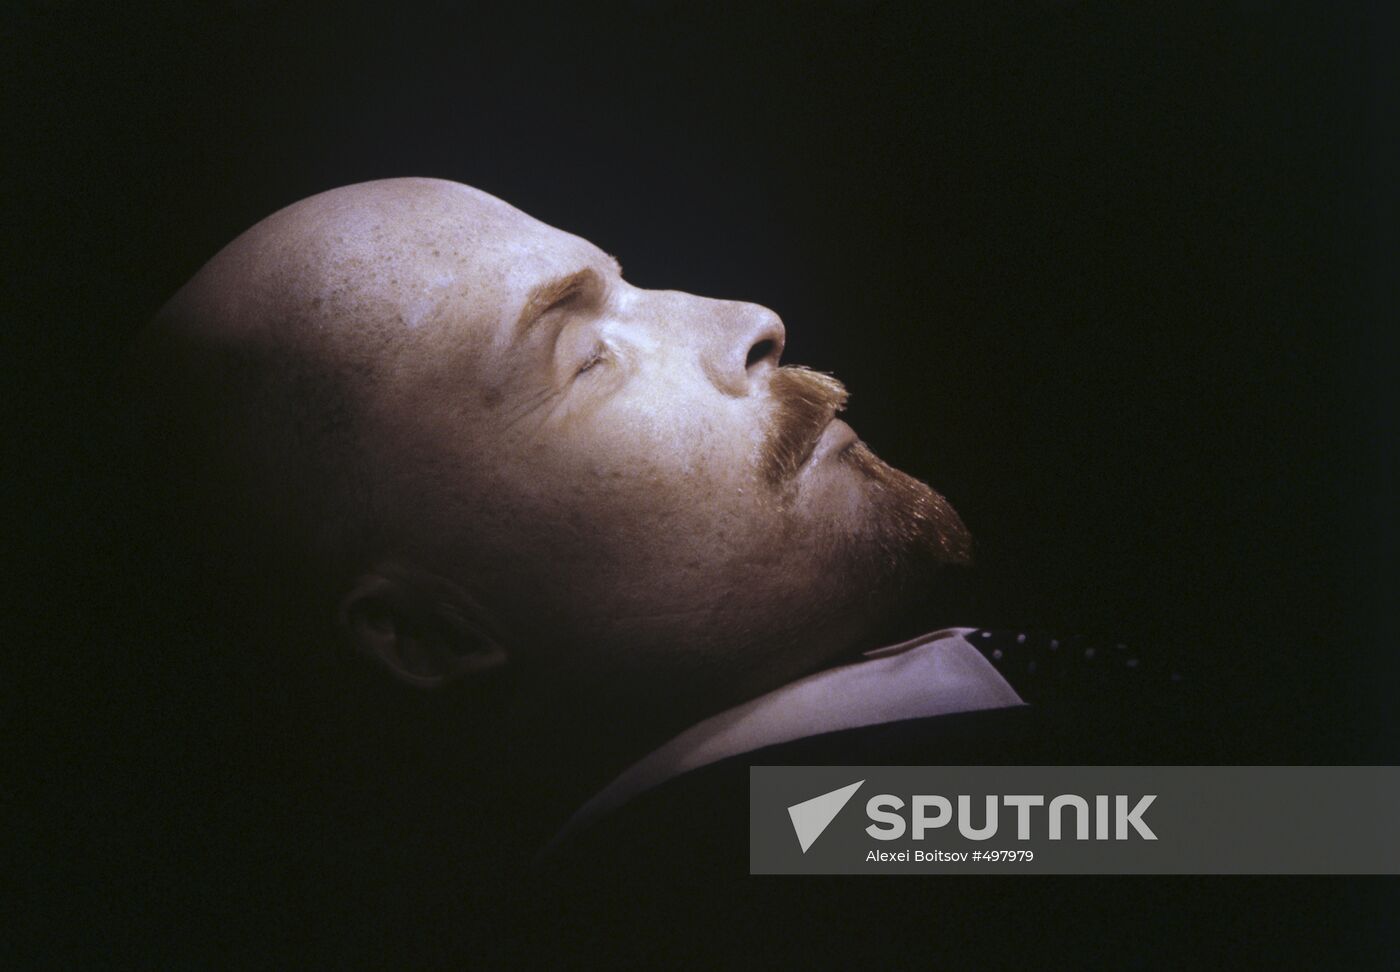 Vladimir Lenin's body